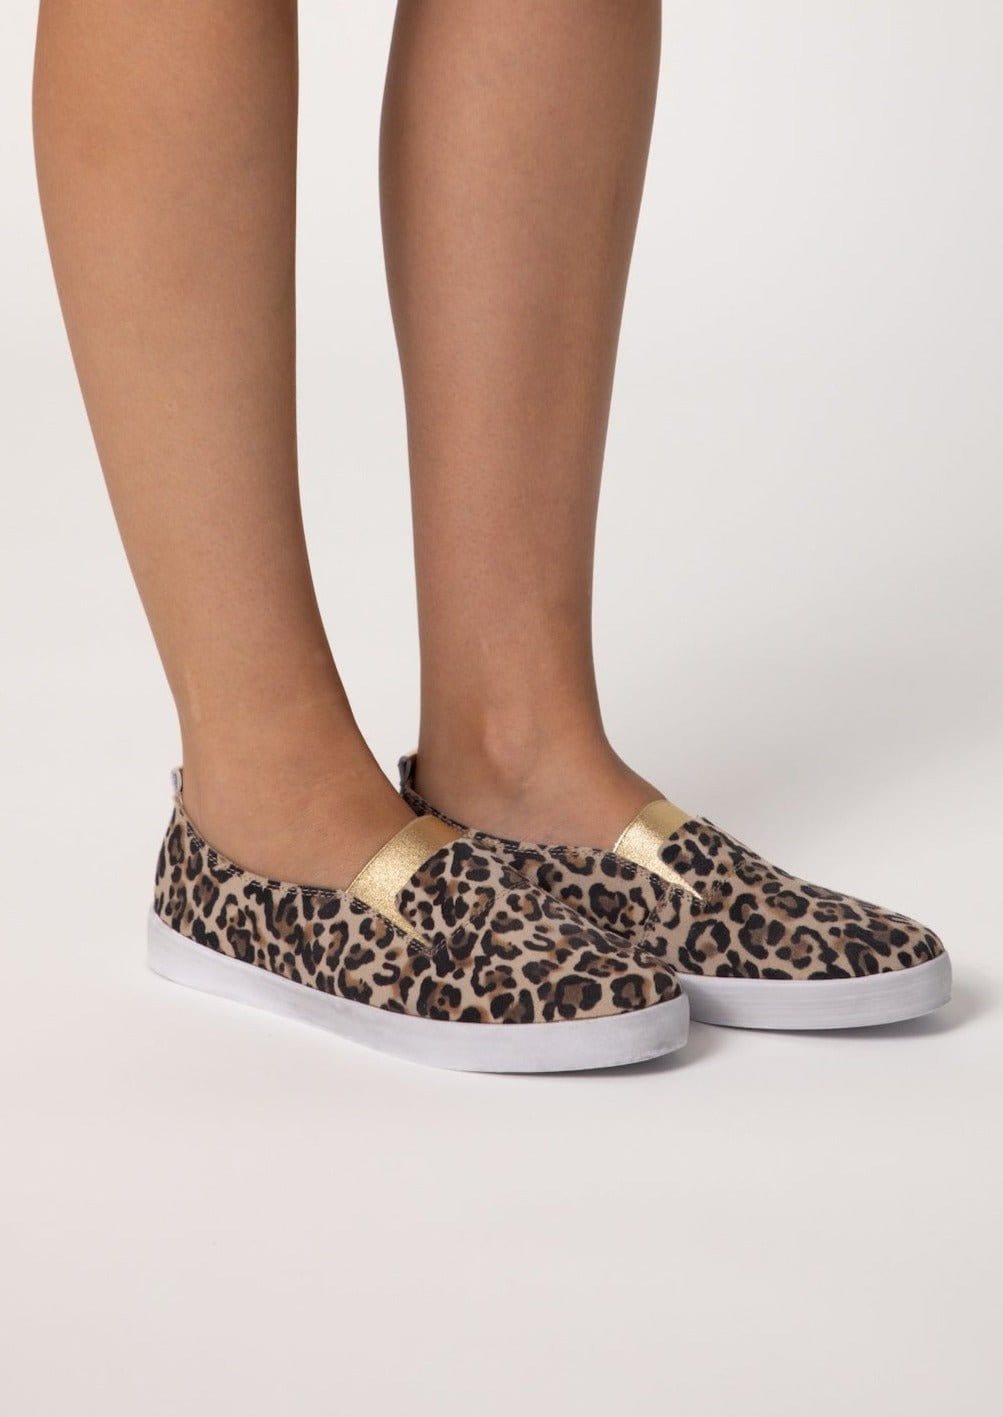 Fran Leather Slip On Sneaker in Leopard Print - Tribute StoreJulz